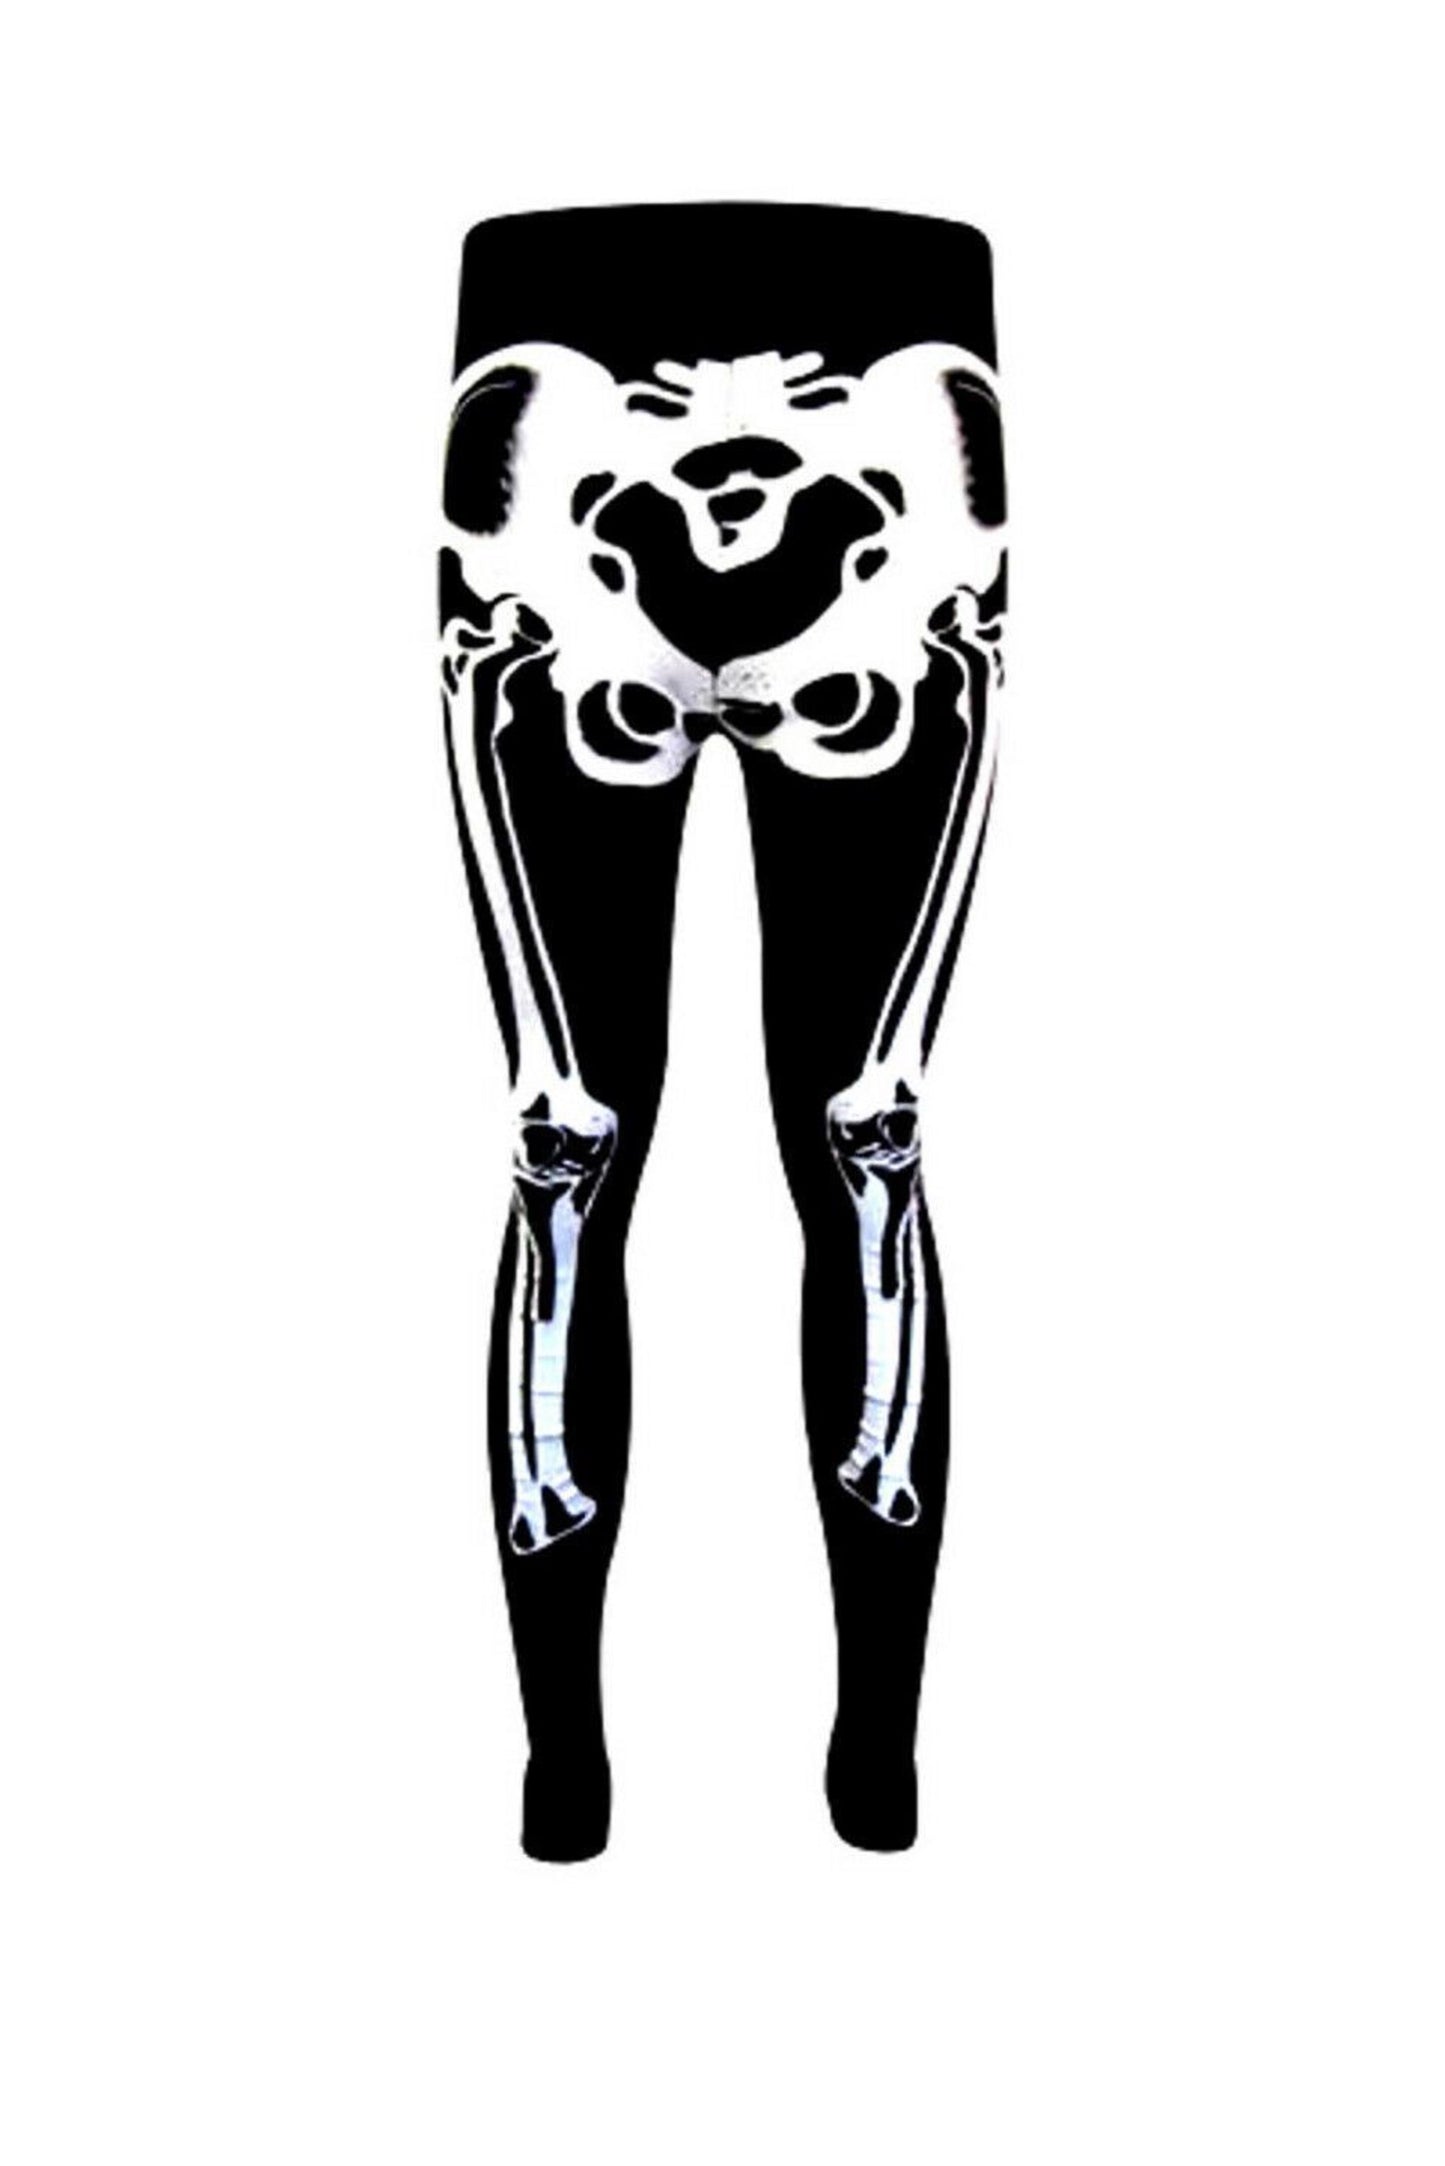 Skeleton Bodysuit Jumpsuit & Leggings